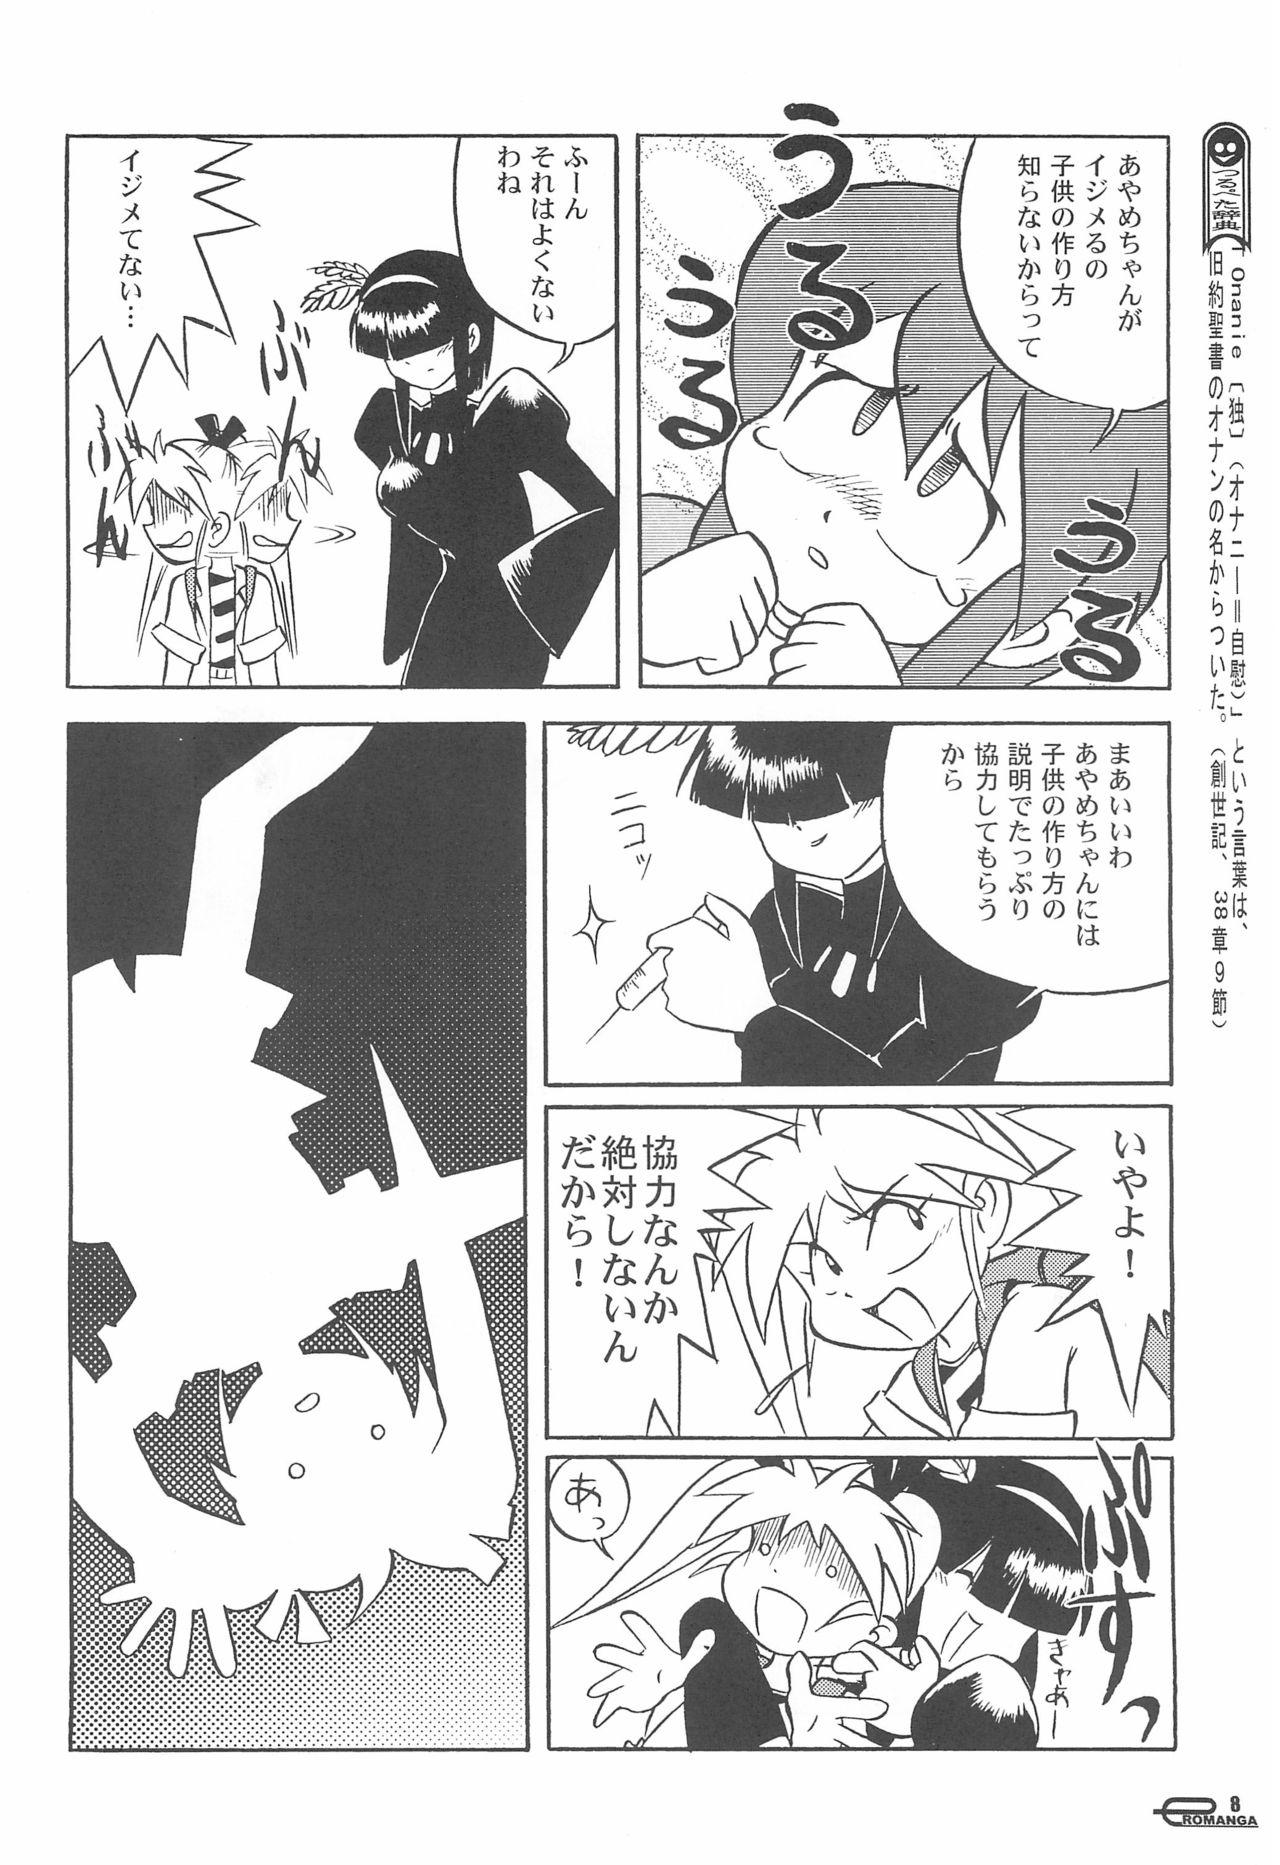 Boy Fuck Girl Manga Science Onna no ko no Himitsu - Manga science Porno Amateur - Page 10